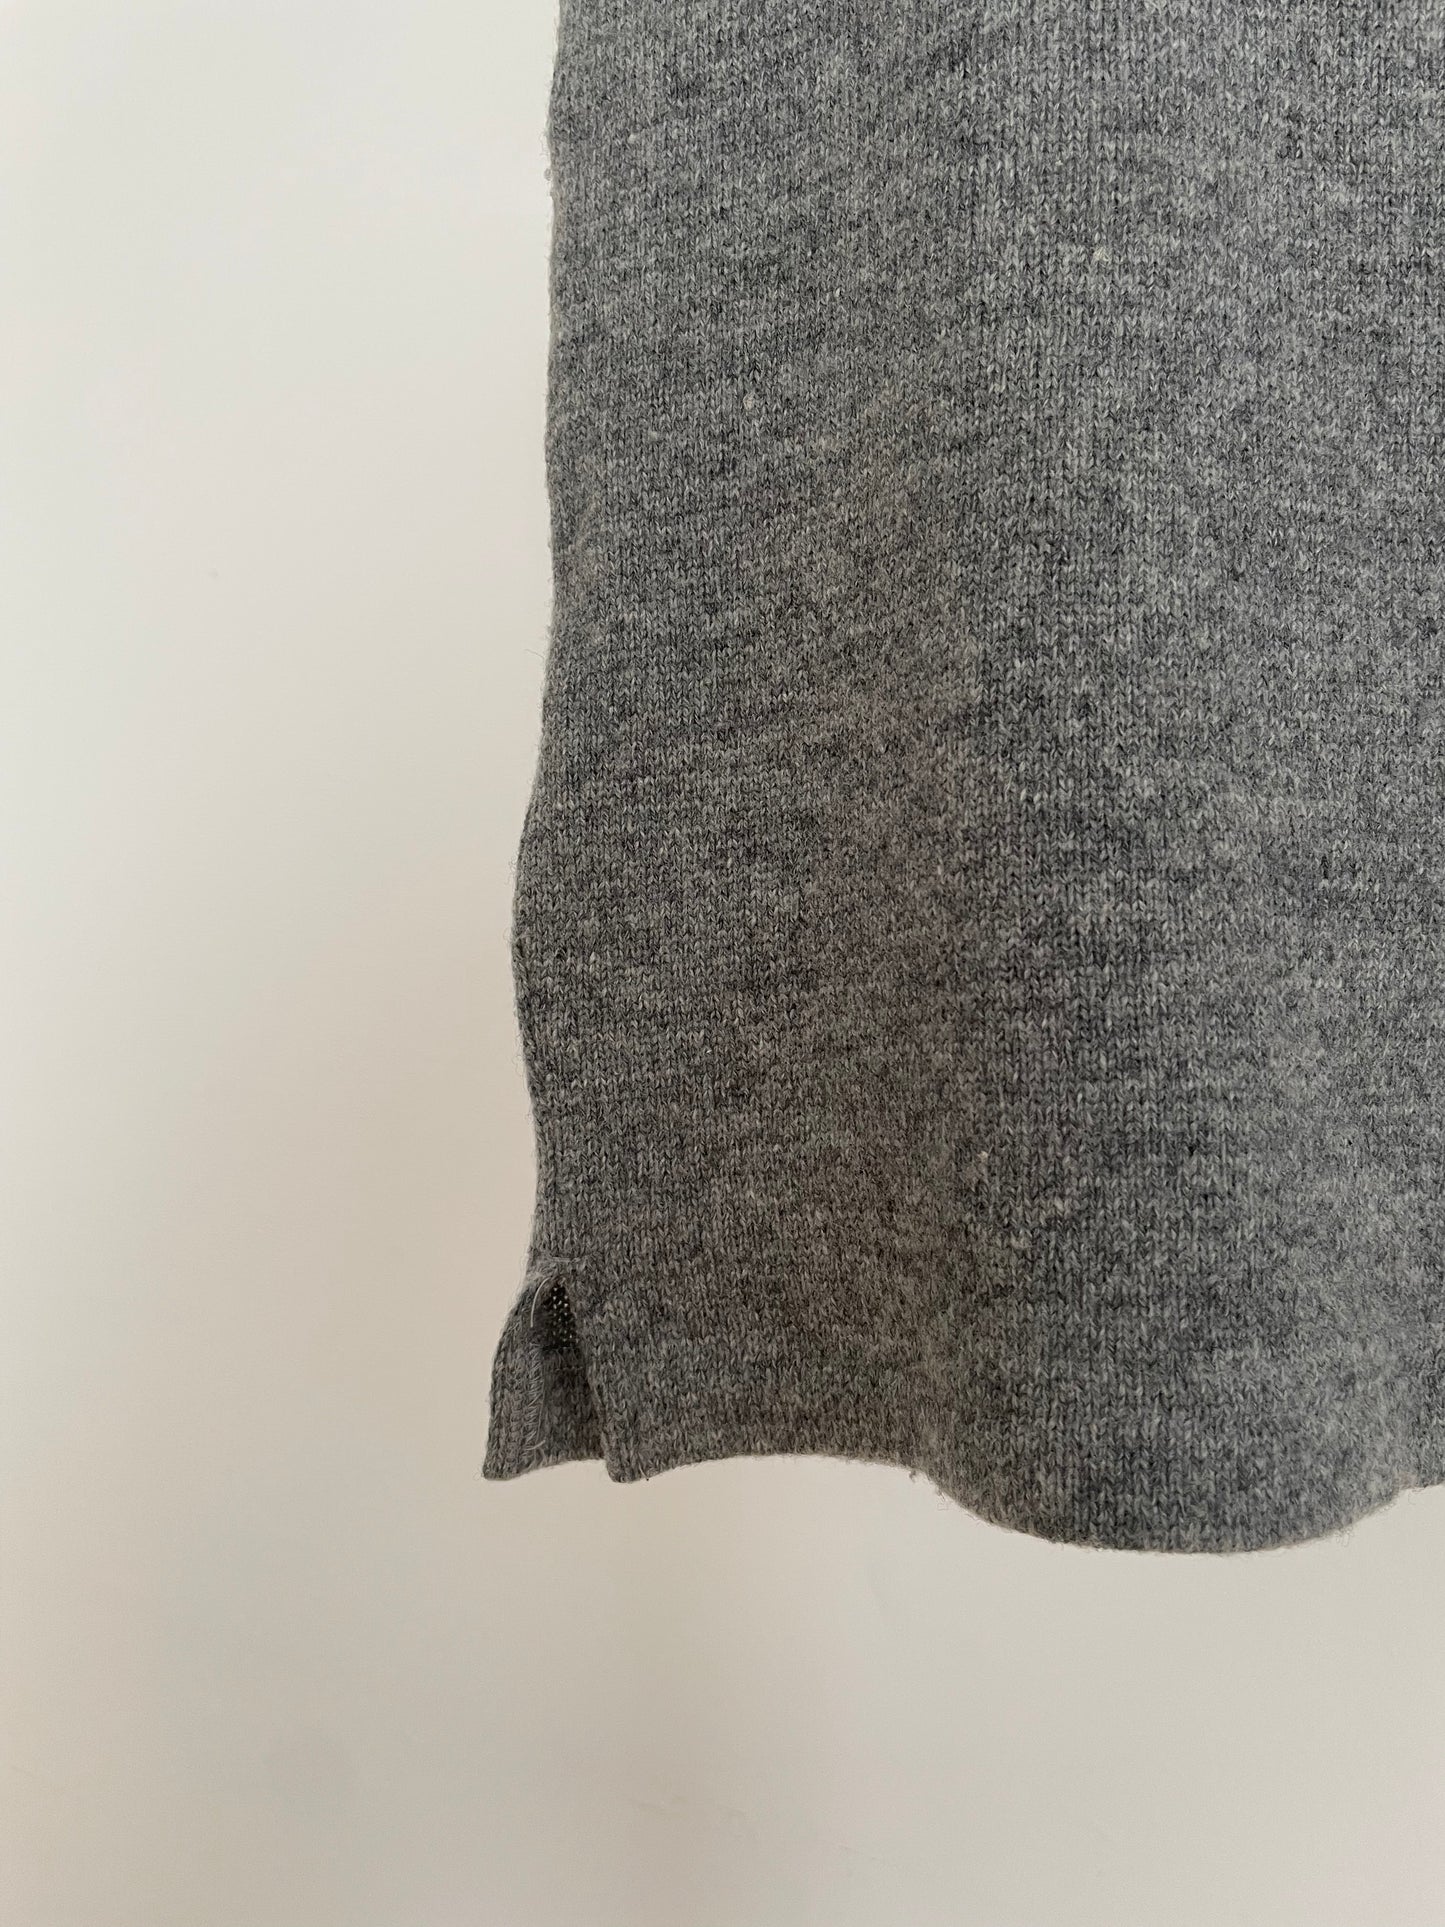 Yohji Yamamoto gray sleeveless sweater